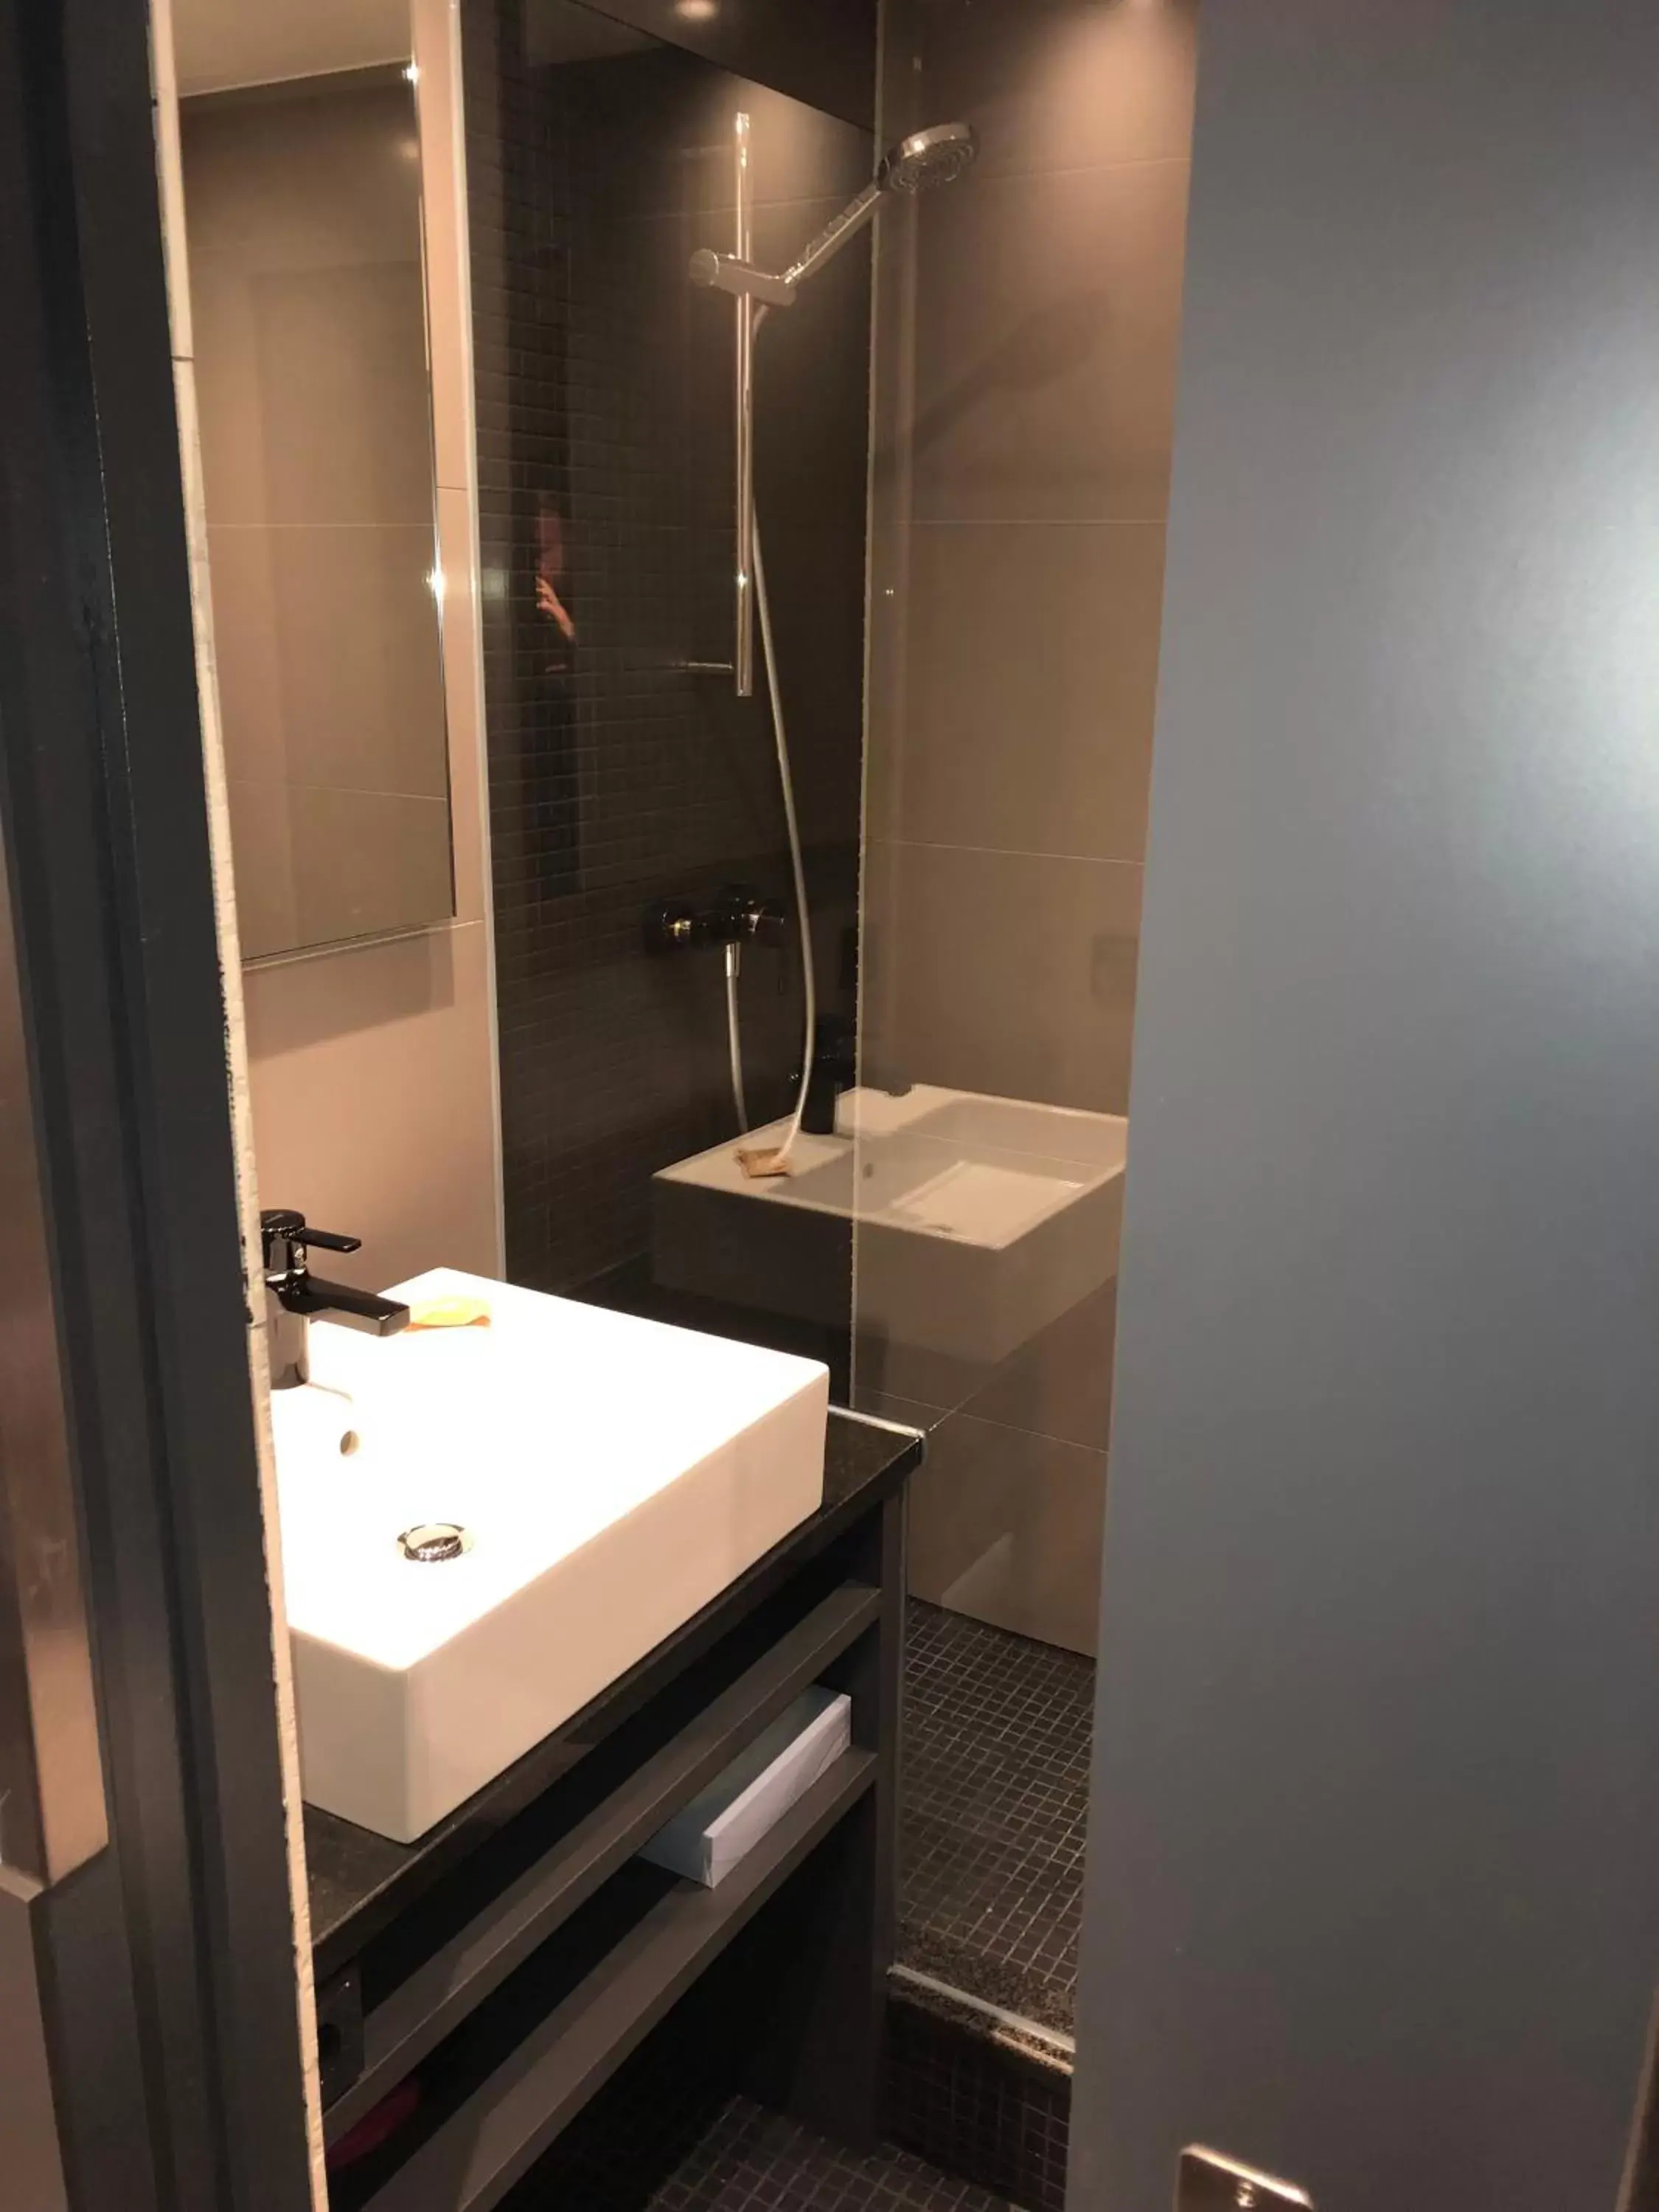 Bathroom in Munich Deluxe Hotel